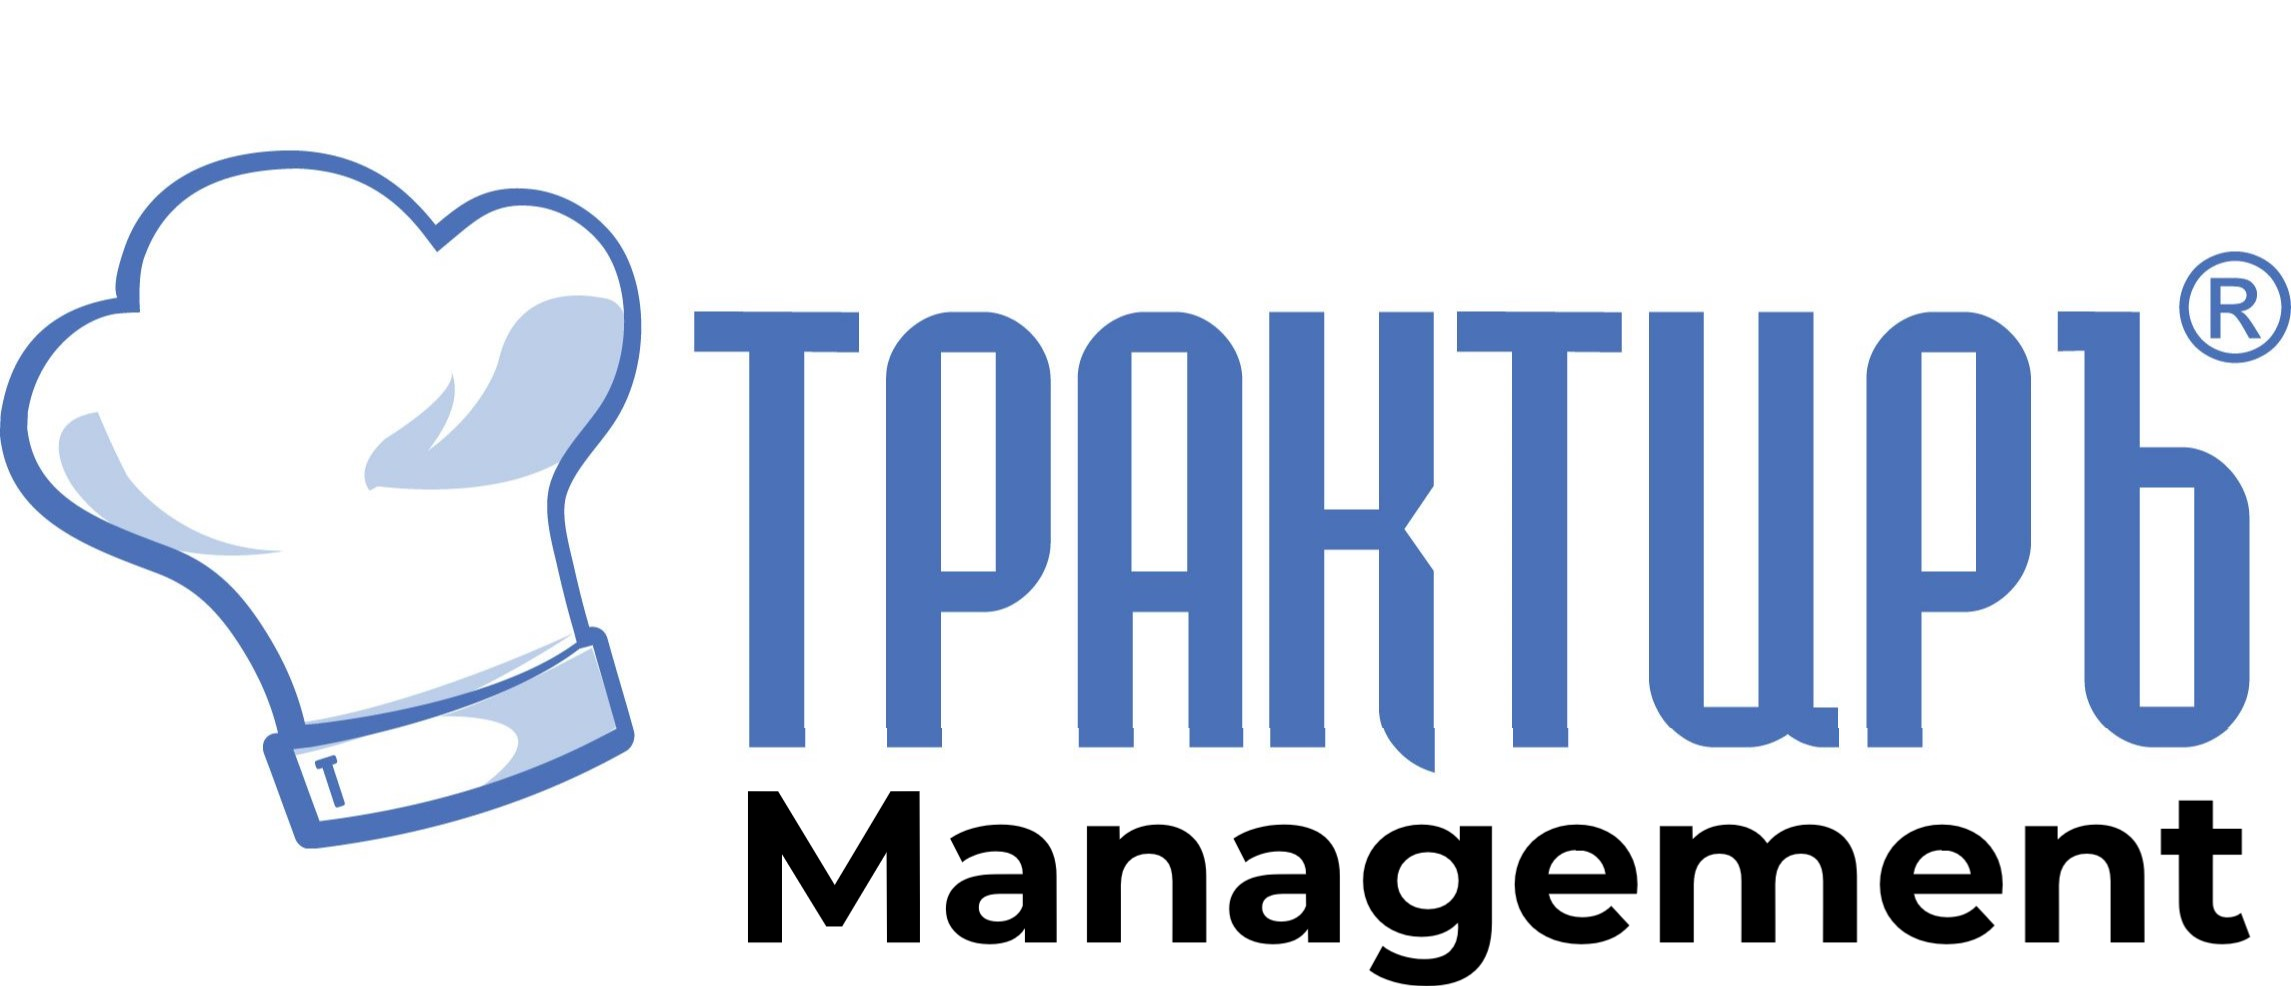 Трактиръ: Management в Ижевске